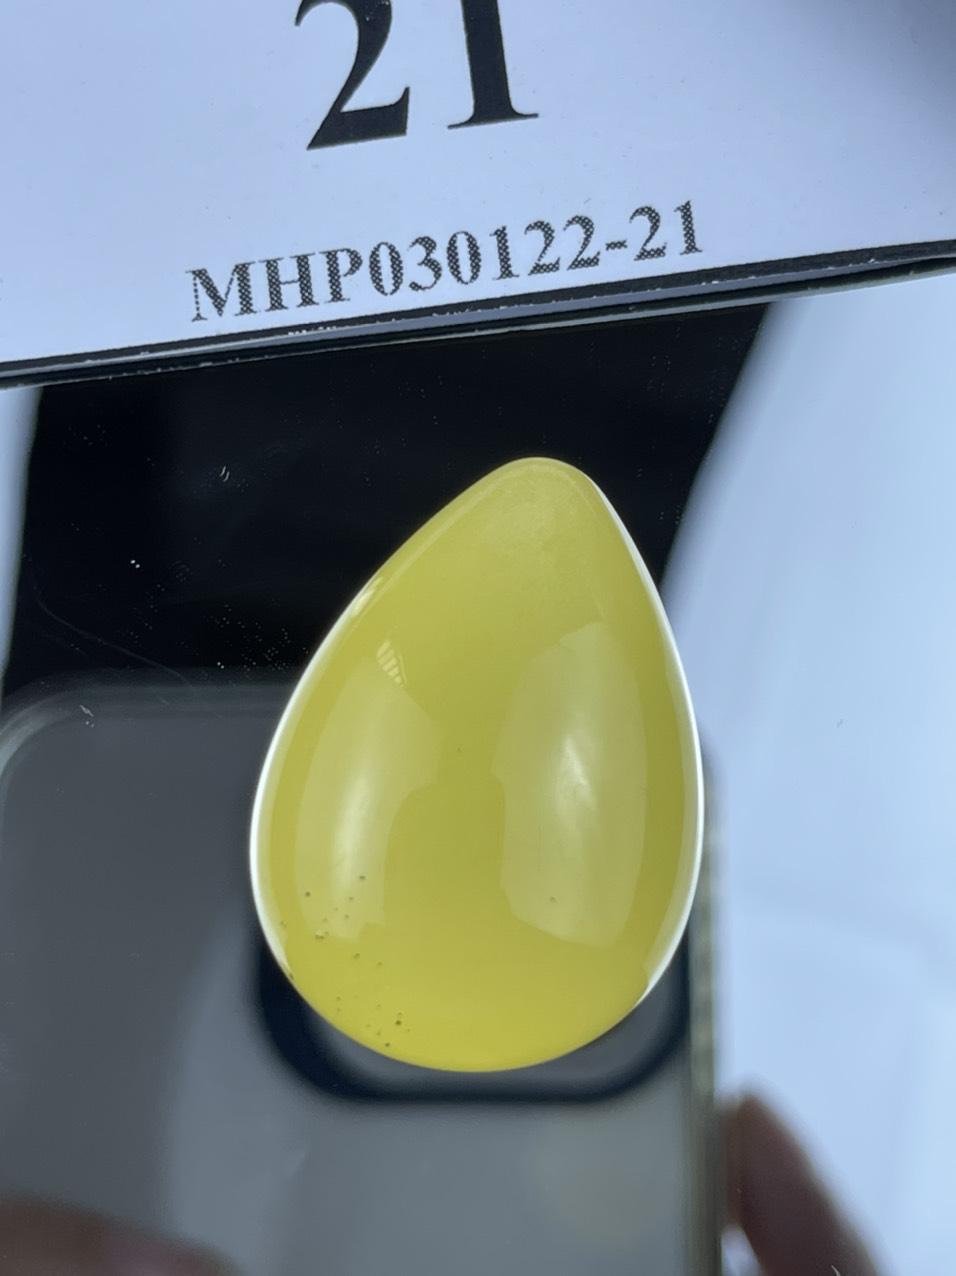 Mặt dây chuyền Hổ phách MHP030122-21